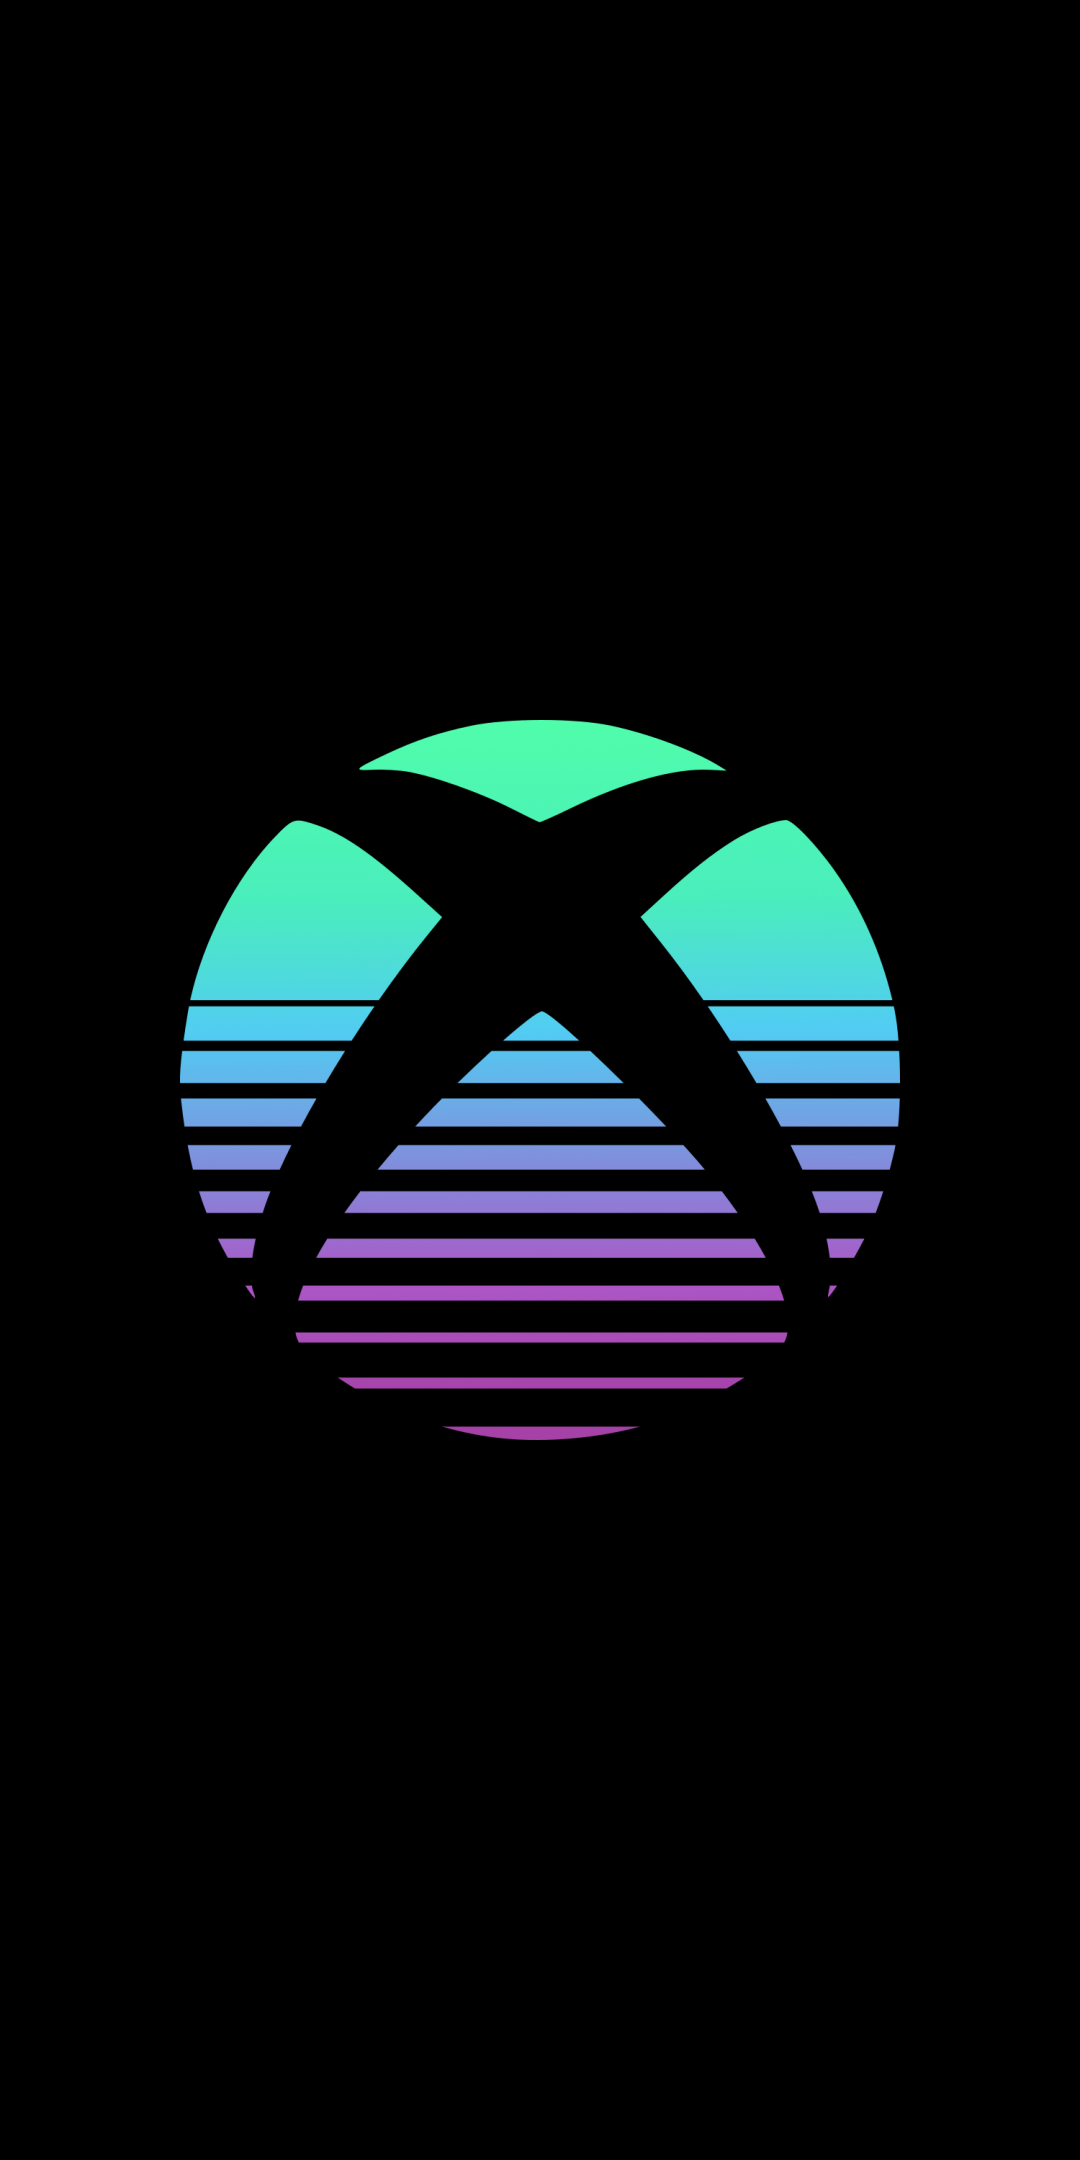 Xbox Wallpaper 4K, Logo, Black background, AMOLED, Gradient, 5K